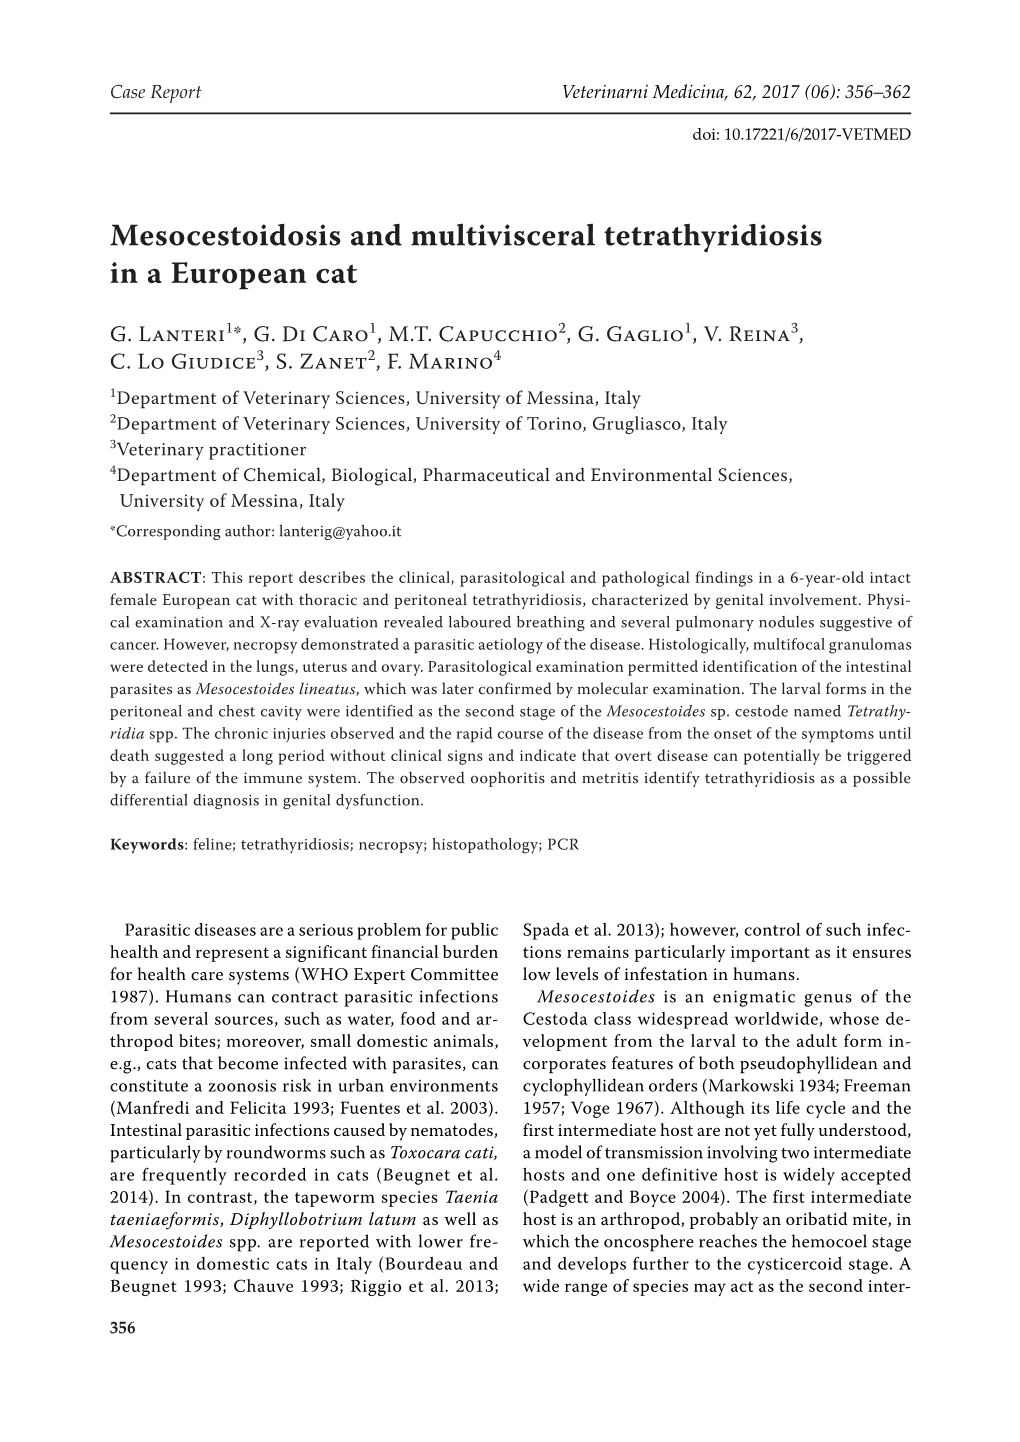 Mesocestoidosis and Multivisceral Tetrathyridiosis in a European Cat